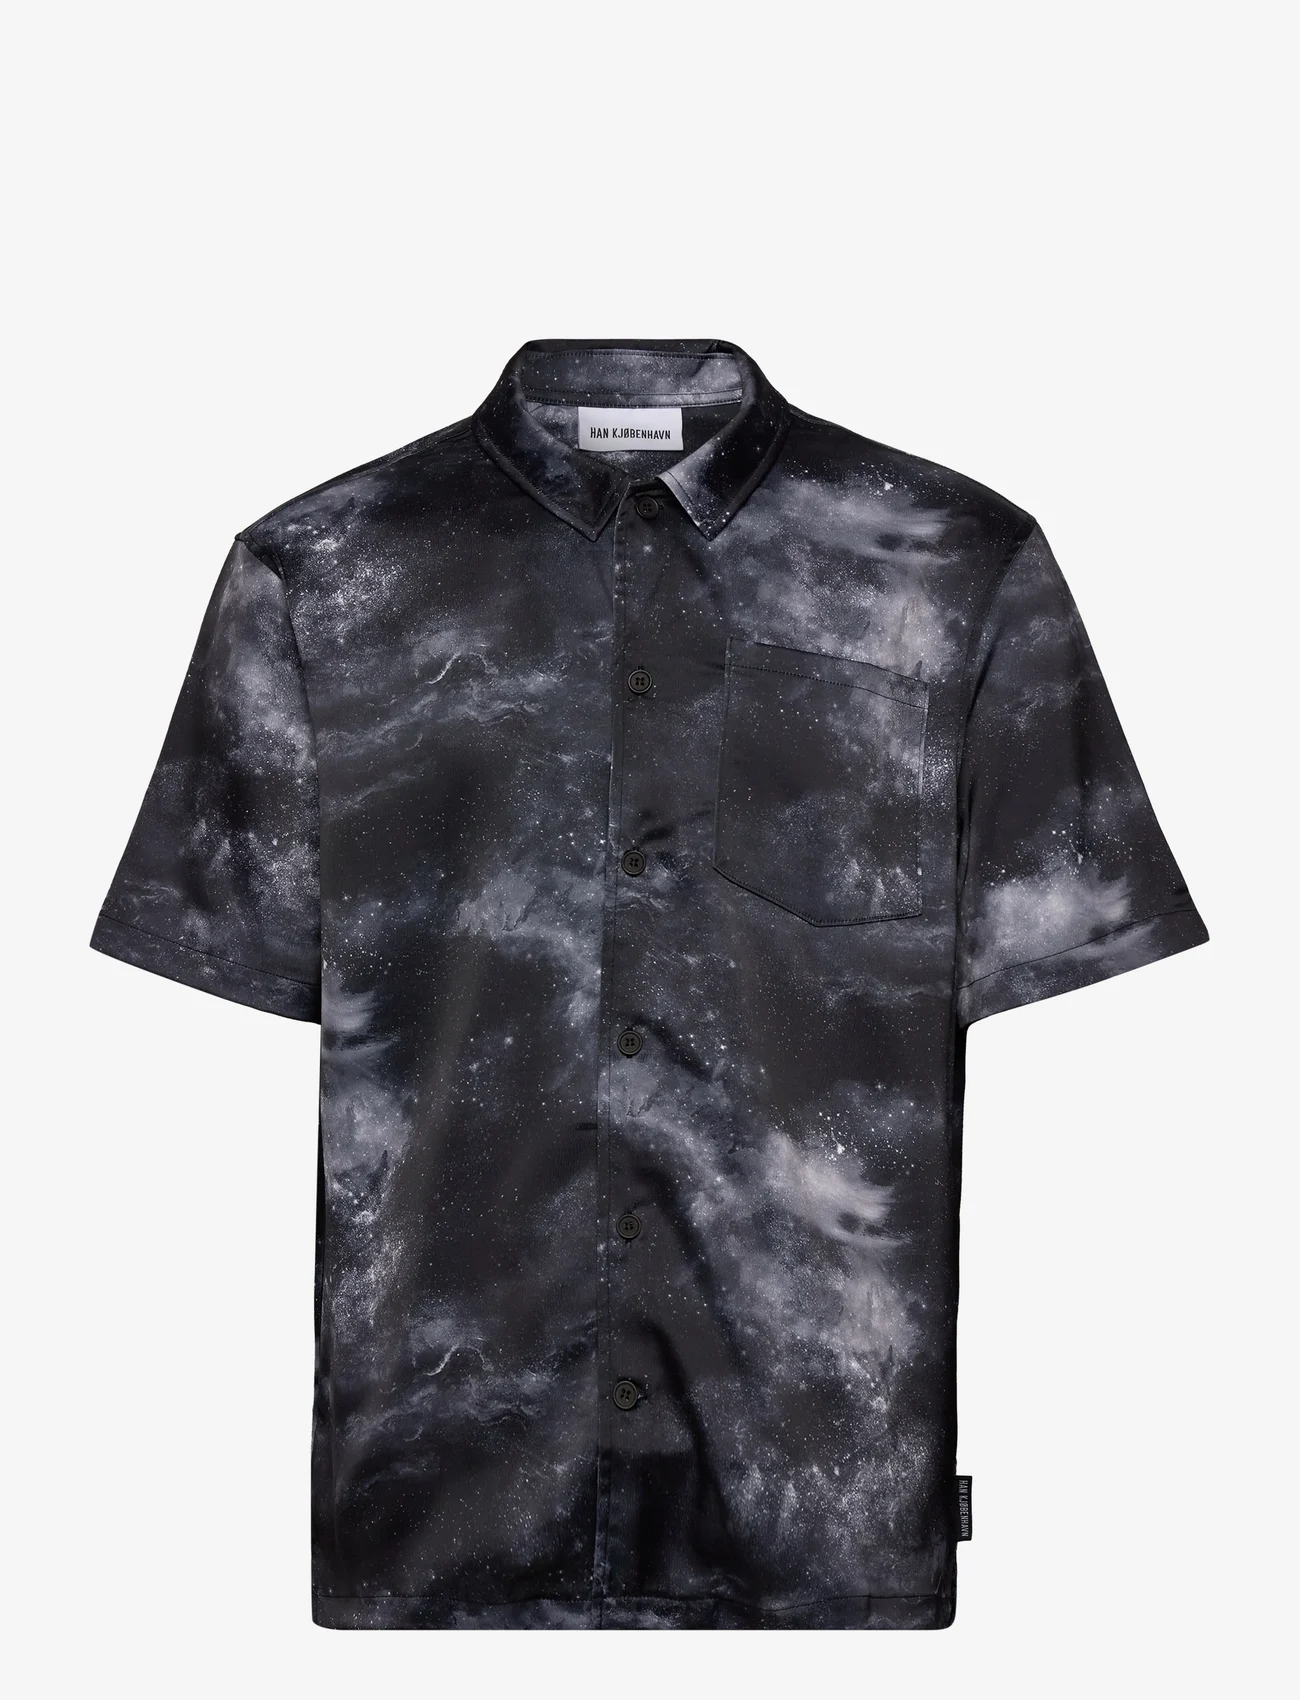 HAN Kjøbenhavn - Printed Summer Shirt Short Sleeve - kurzarmhemden - grey - 0